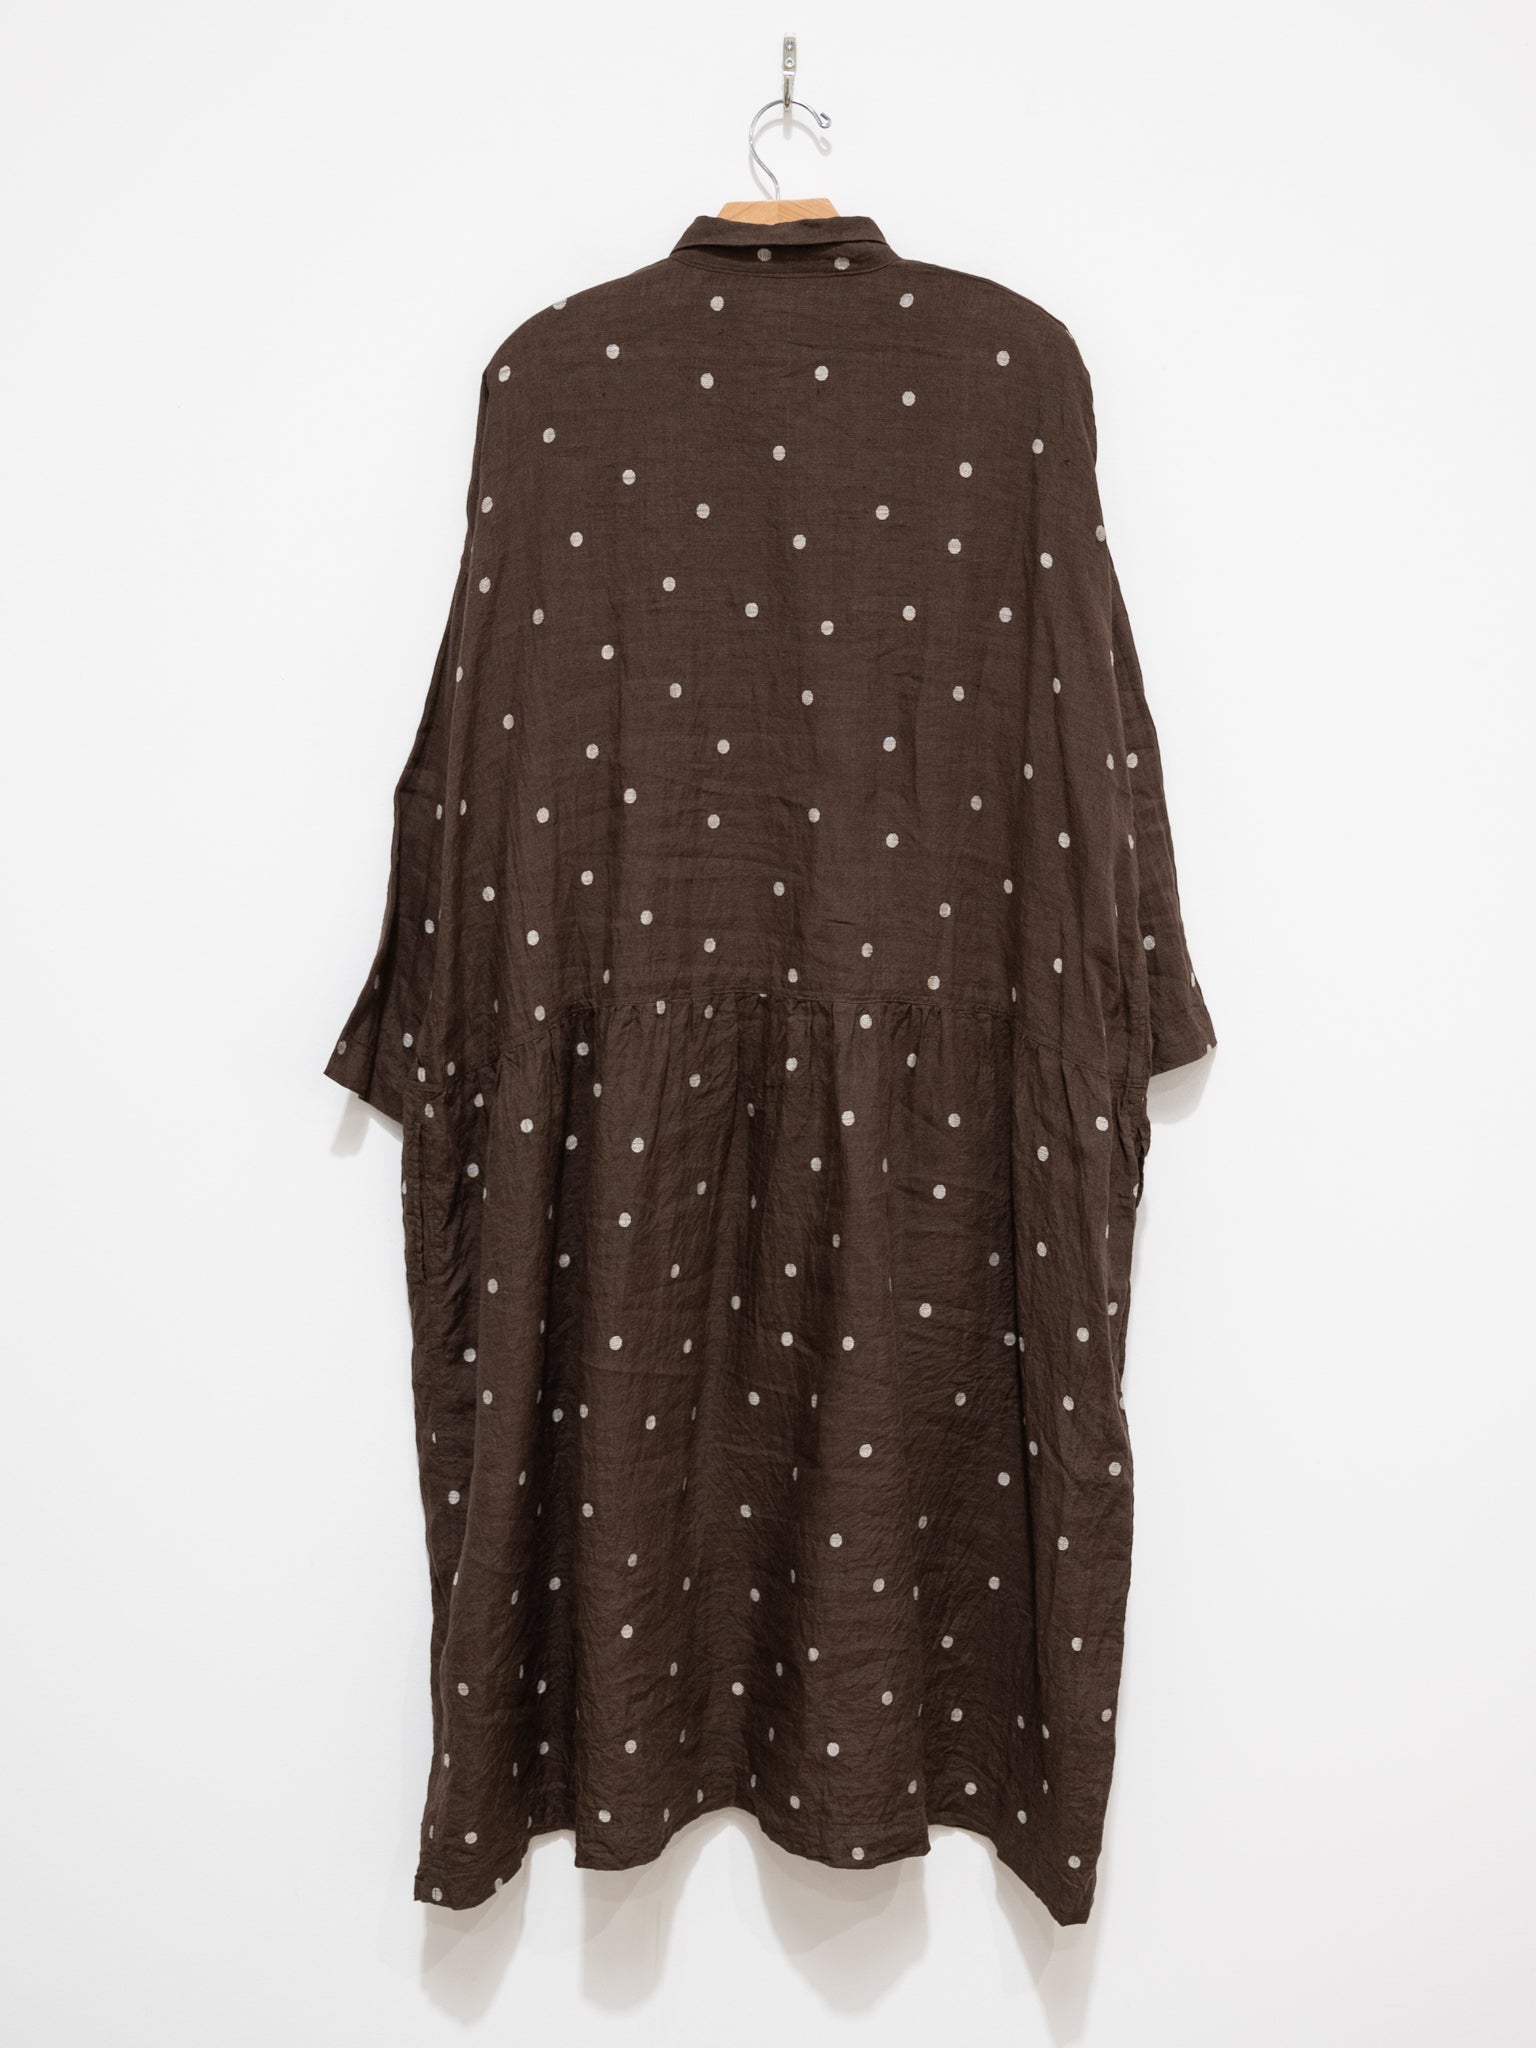 Namu Shop - Ichi Antiquites Linen Dot Shirt Dress - Brown x Natural